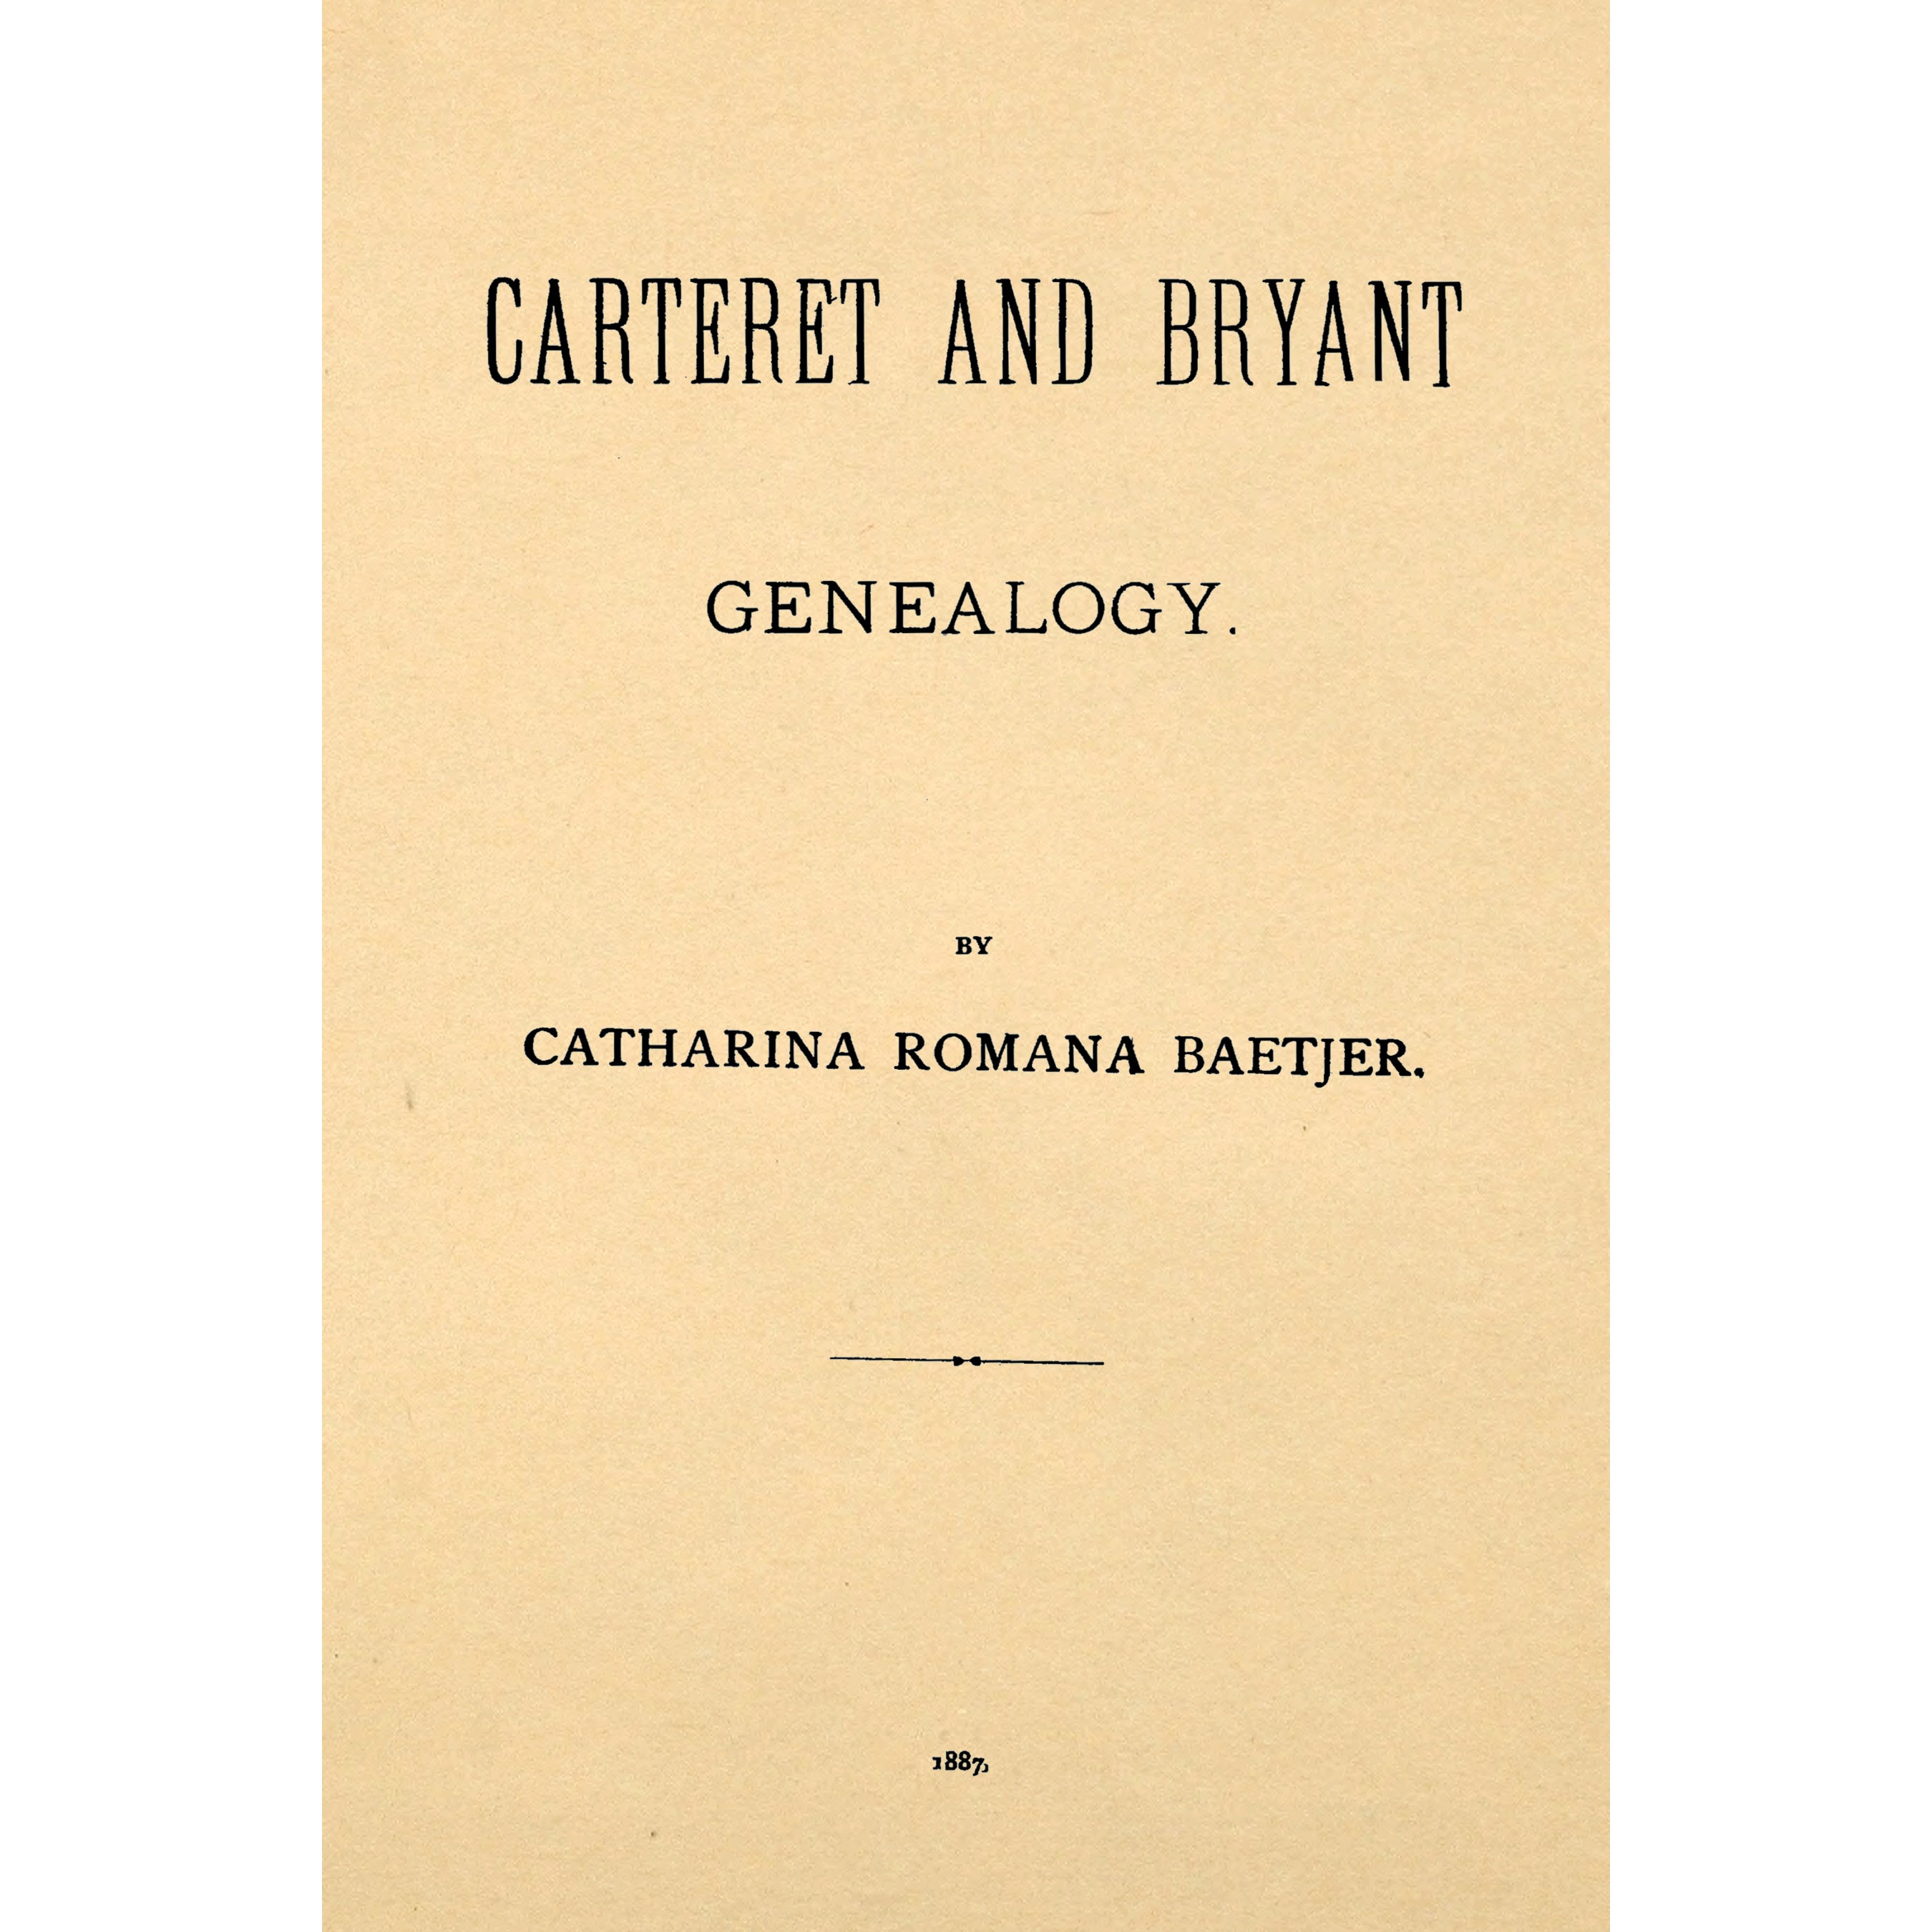 Carteret and Bryant genealogy